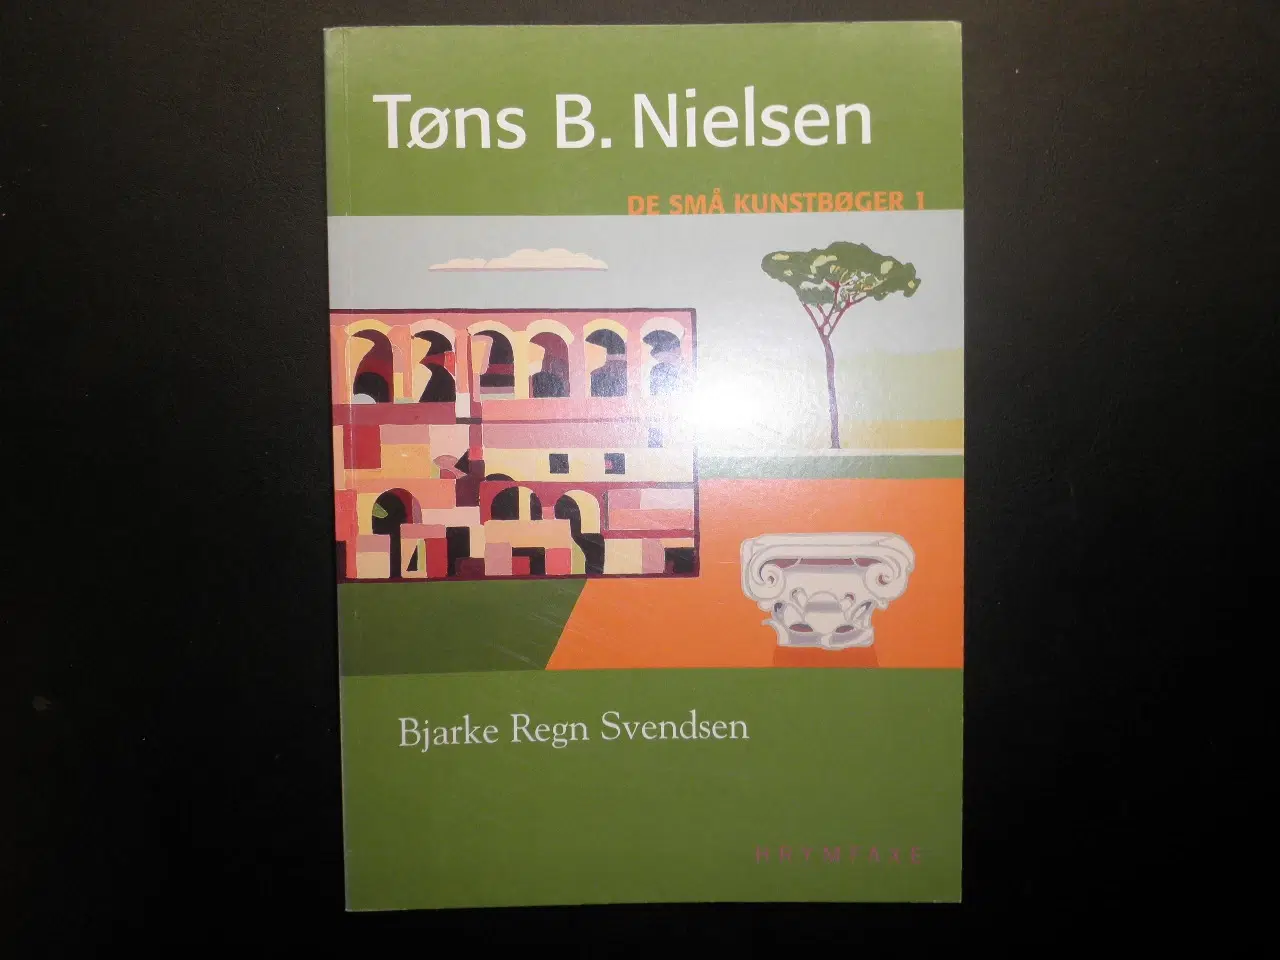 Billede 1 - Tøns B. Nielsen